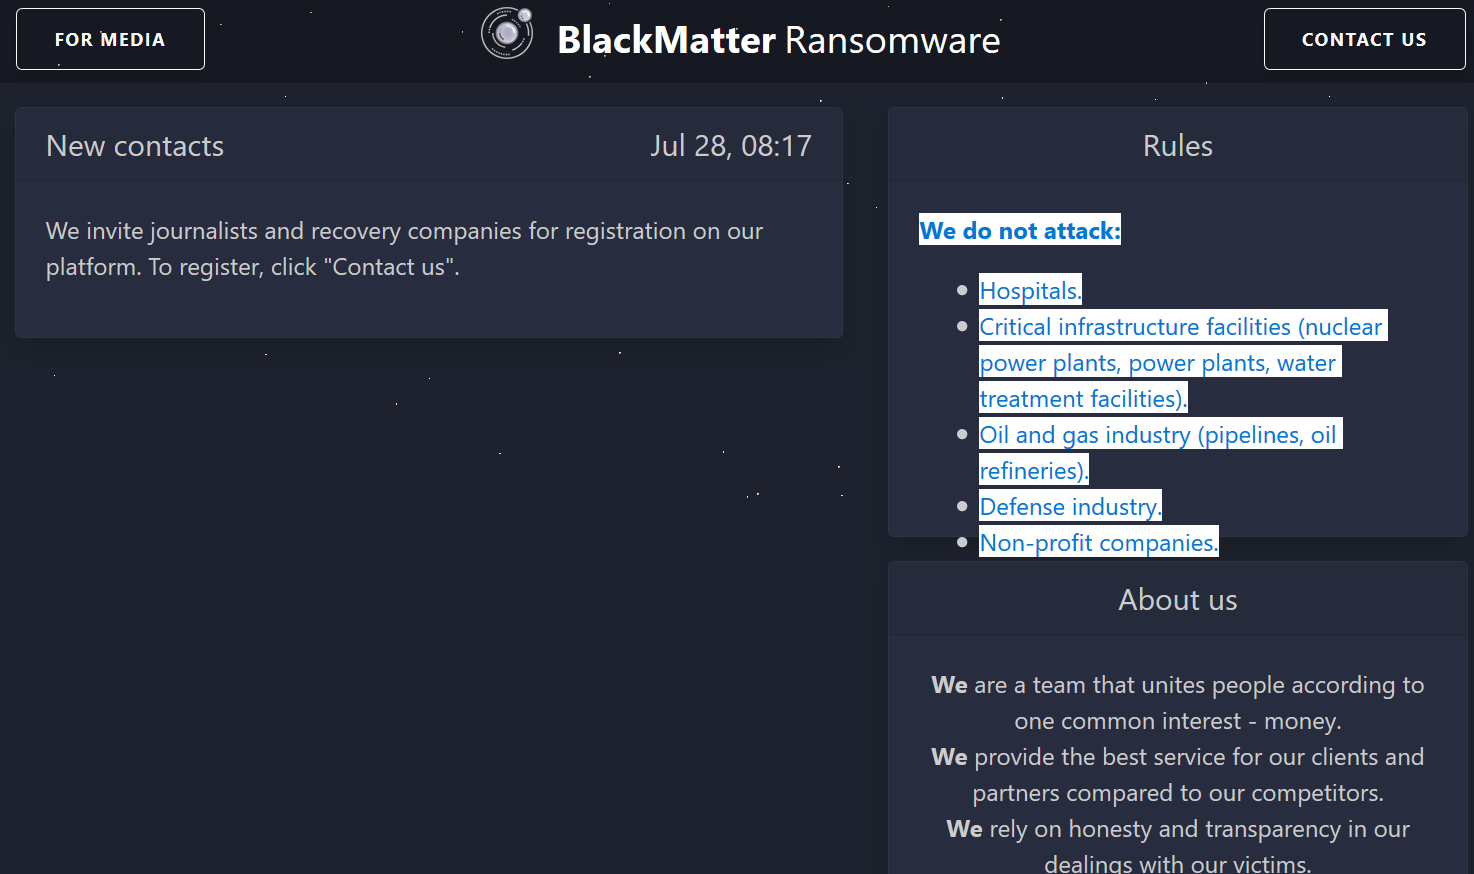 DarkSide ransomware operators move 6.8M worth of Bitcoin after REvil shutdown